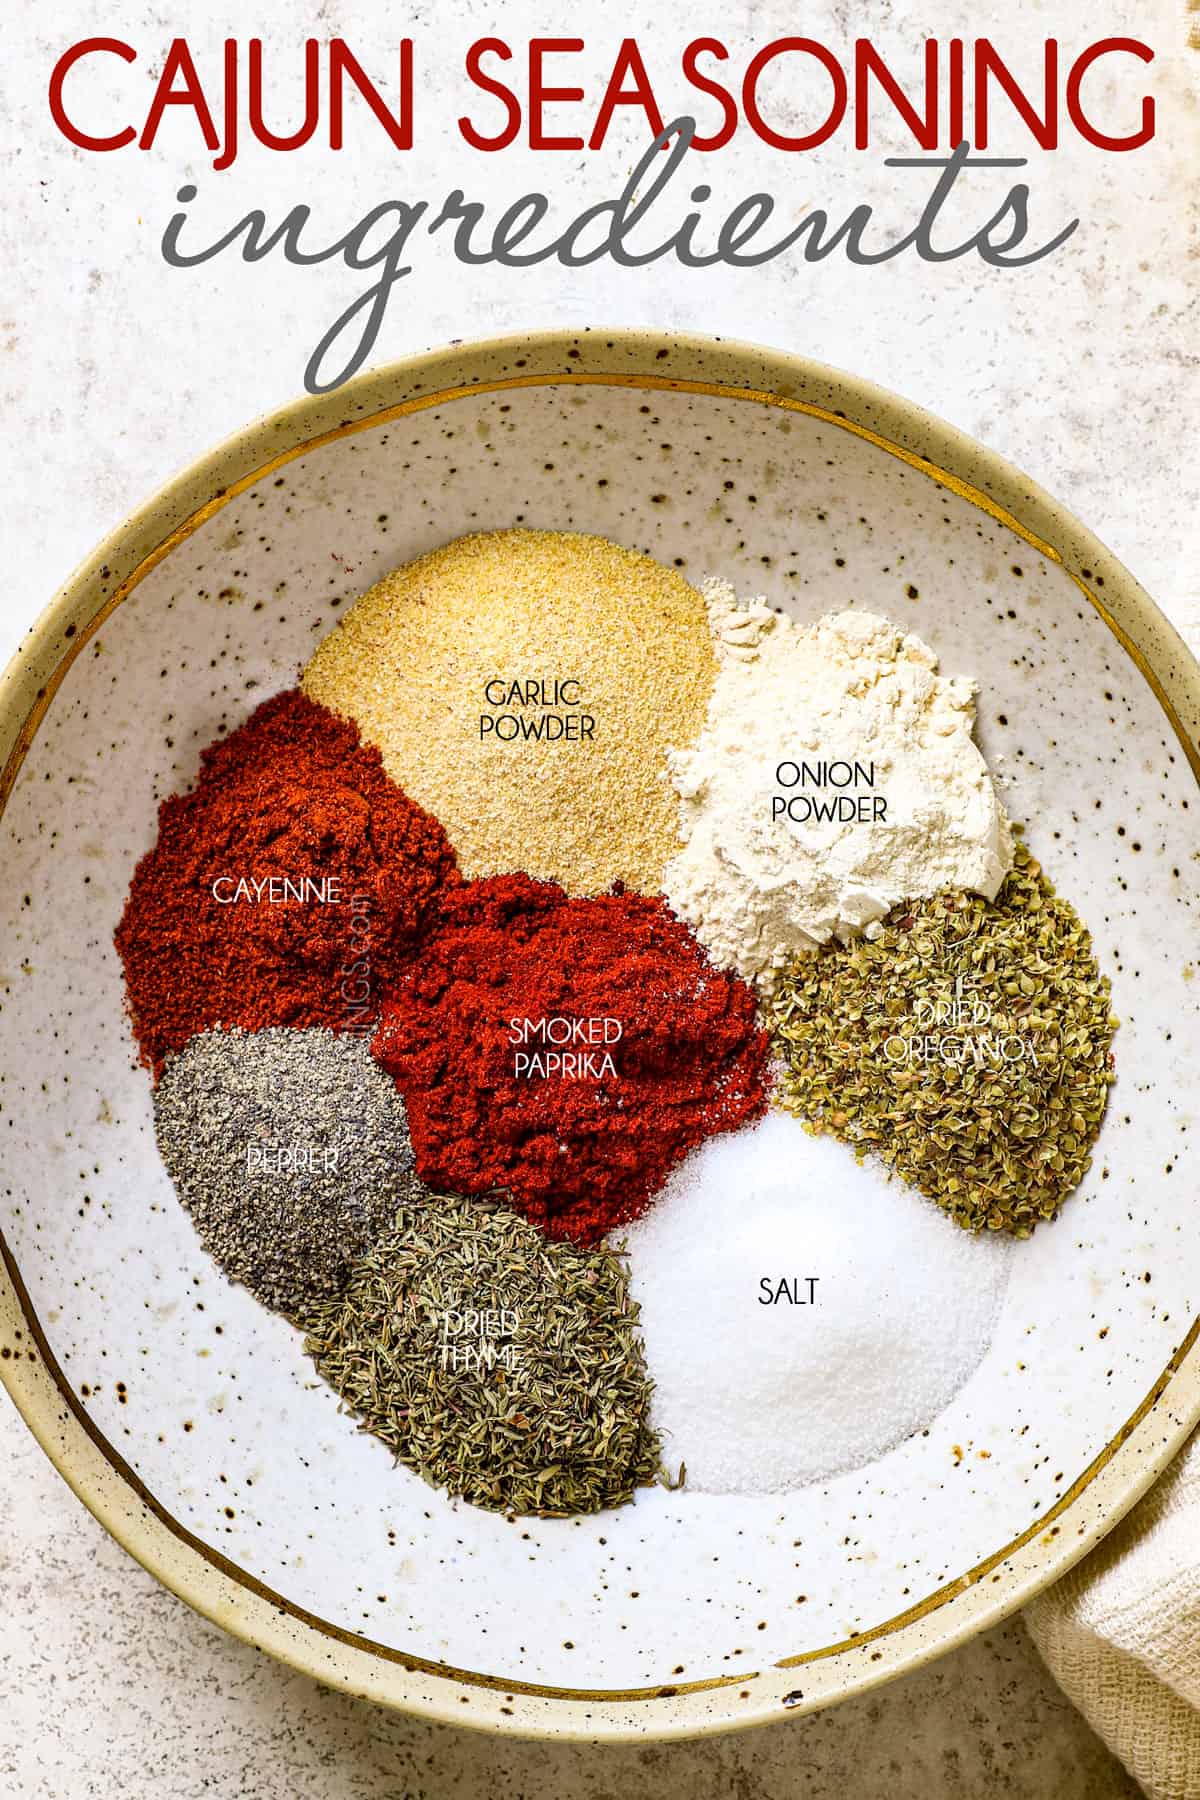 top view of Cajun seasoning recipe ingredients in a bowl:  salt, garlic powder, onion powder, smoked paprika, pepper, cayenne pepper, oregano and thyme